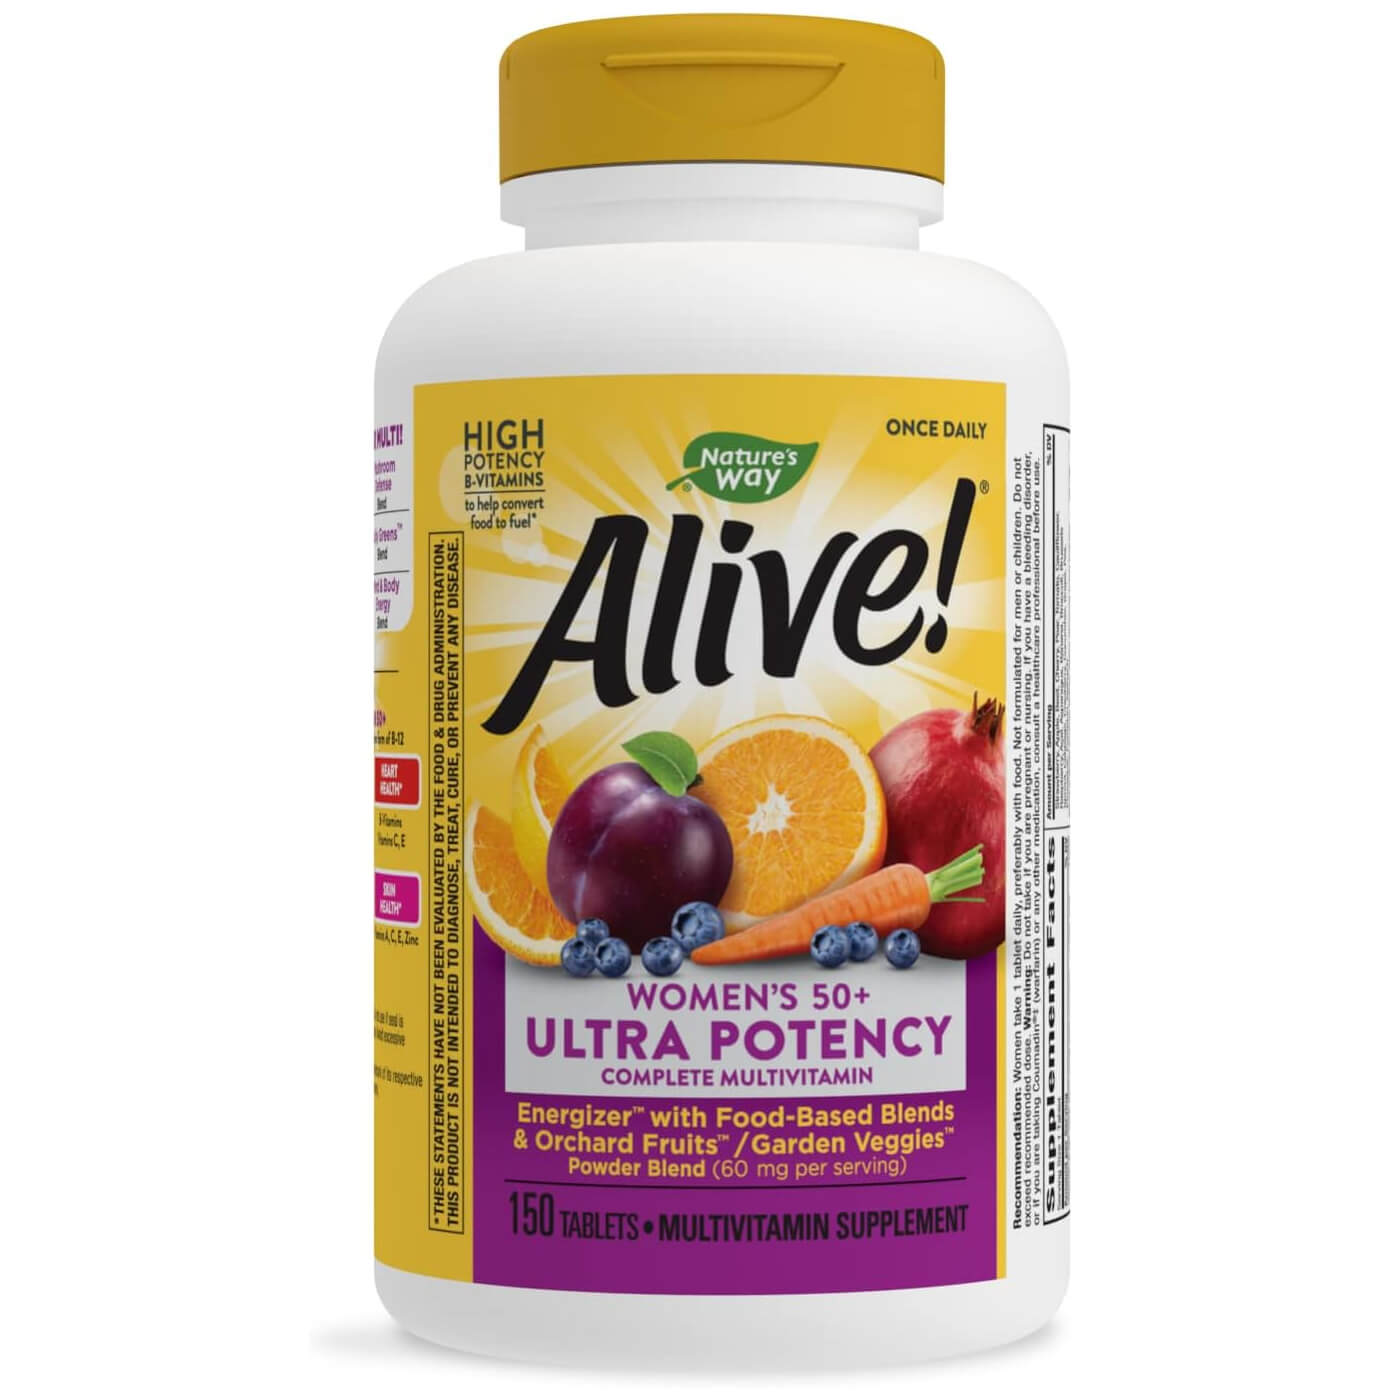 Мультивитамины для женщин 50+ Nature's Way Alive! Ultra Potency Complete Gluten-Free, 150 таблеток nature s way ultra potency для женщин полный мультивитаминный комплекс 150 таблеток